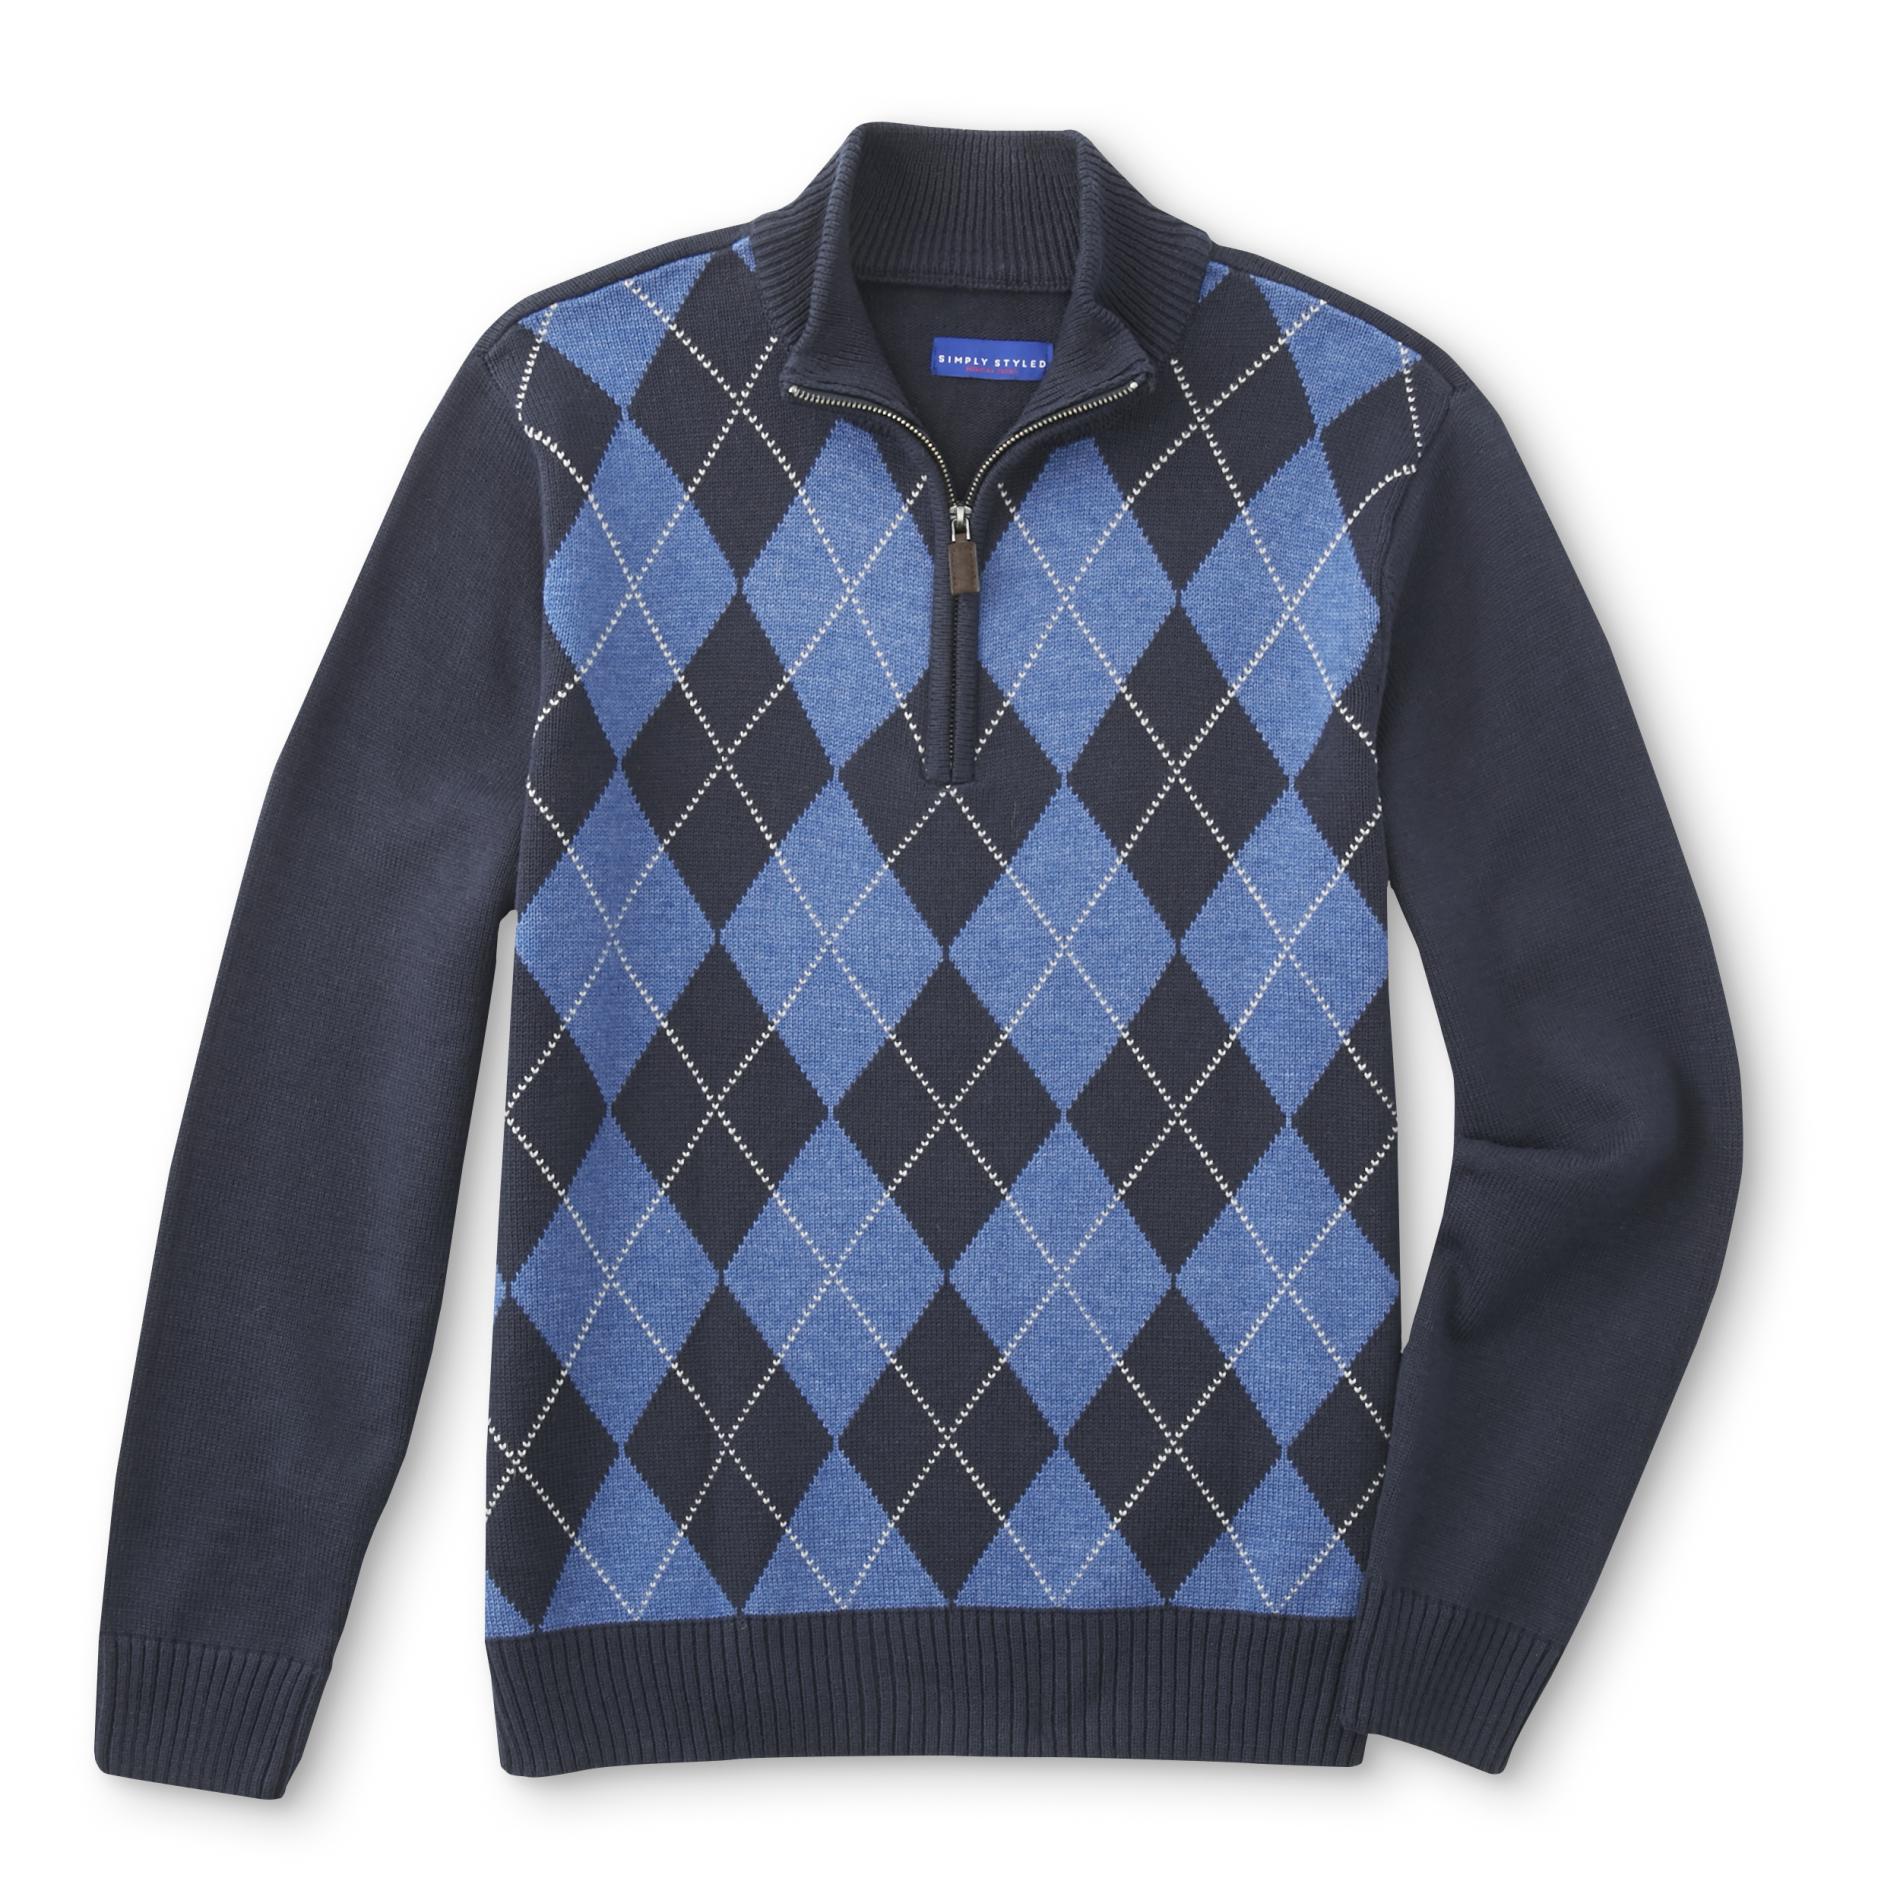 Simply Styled Men's Quarter-Zip Sweater - Argyle